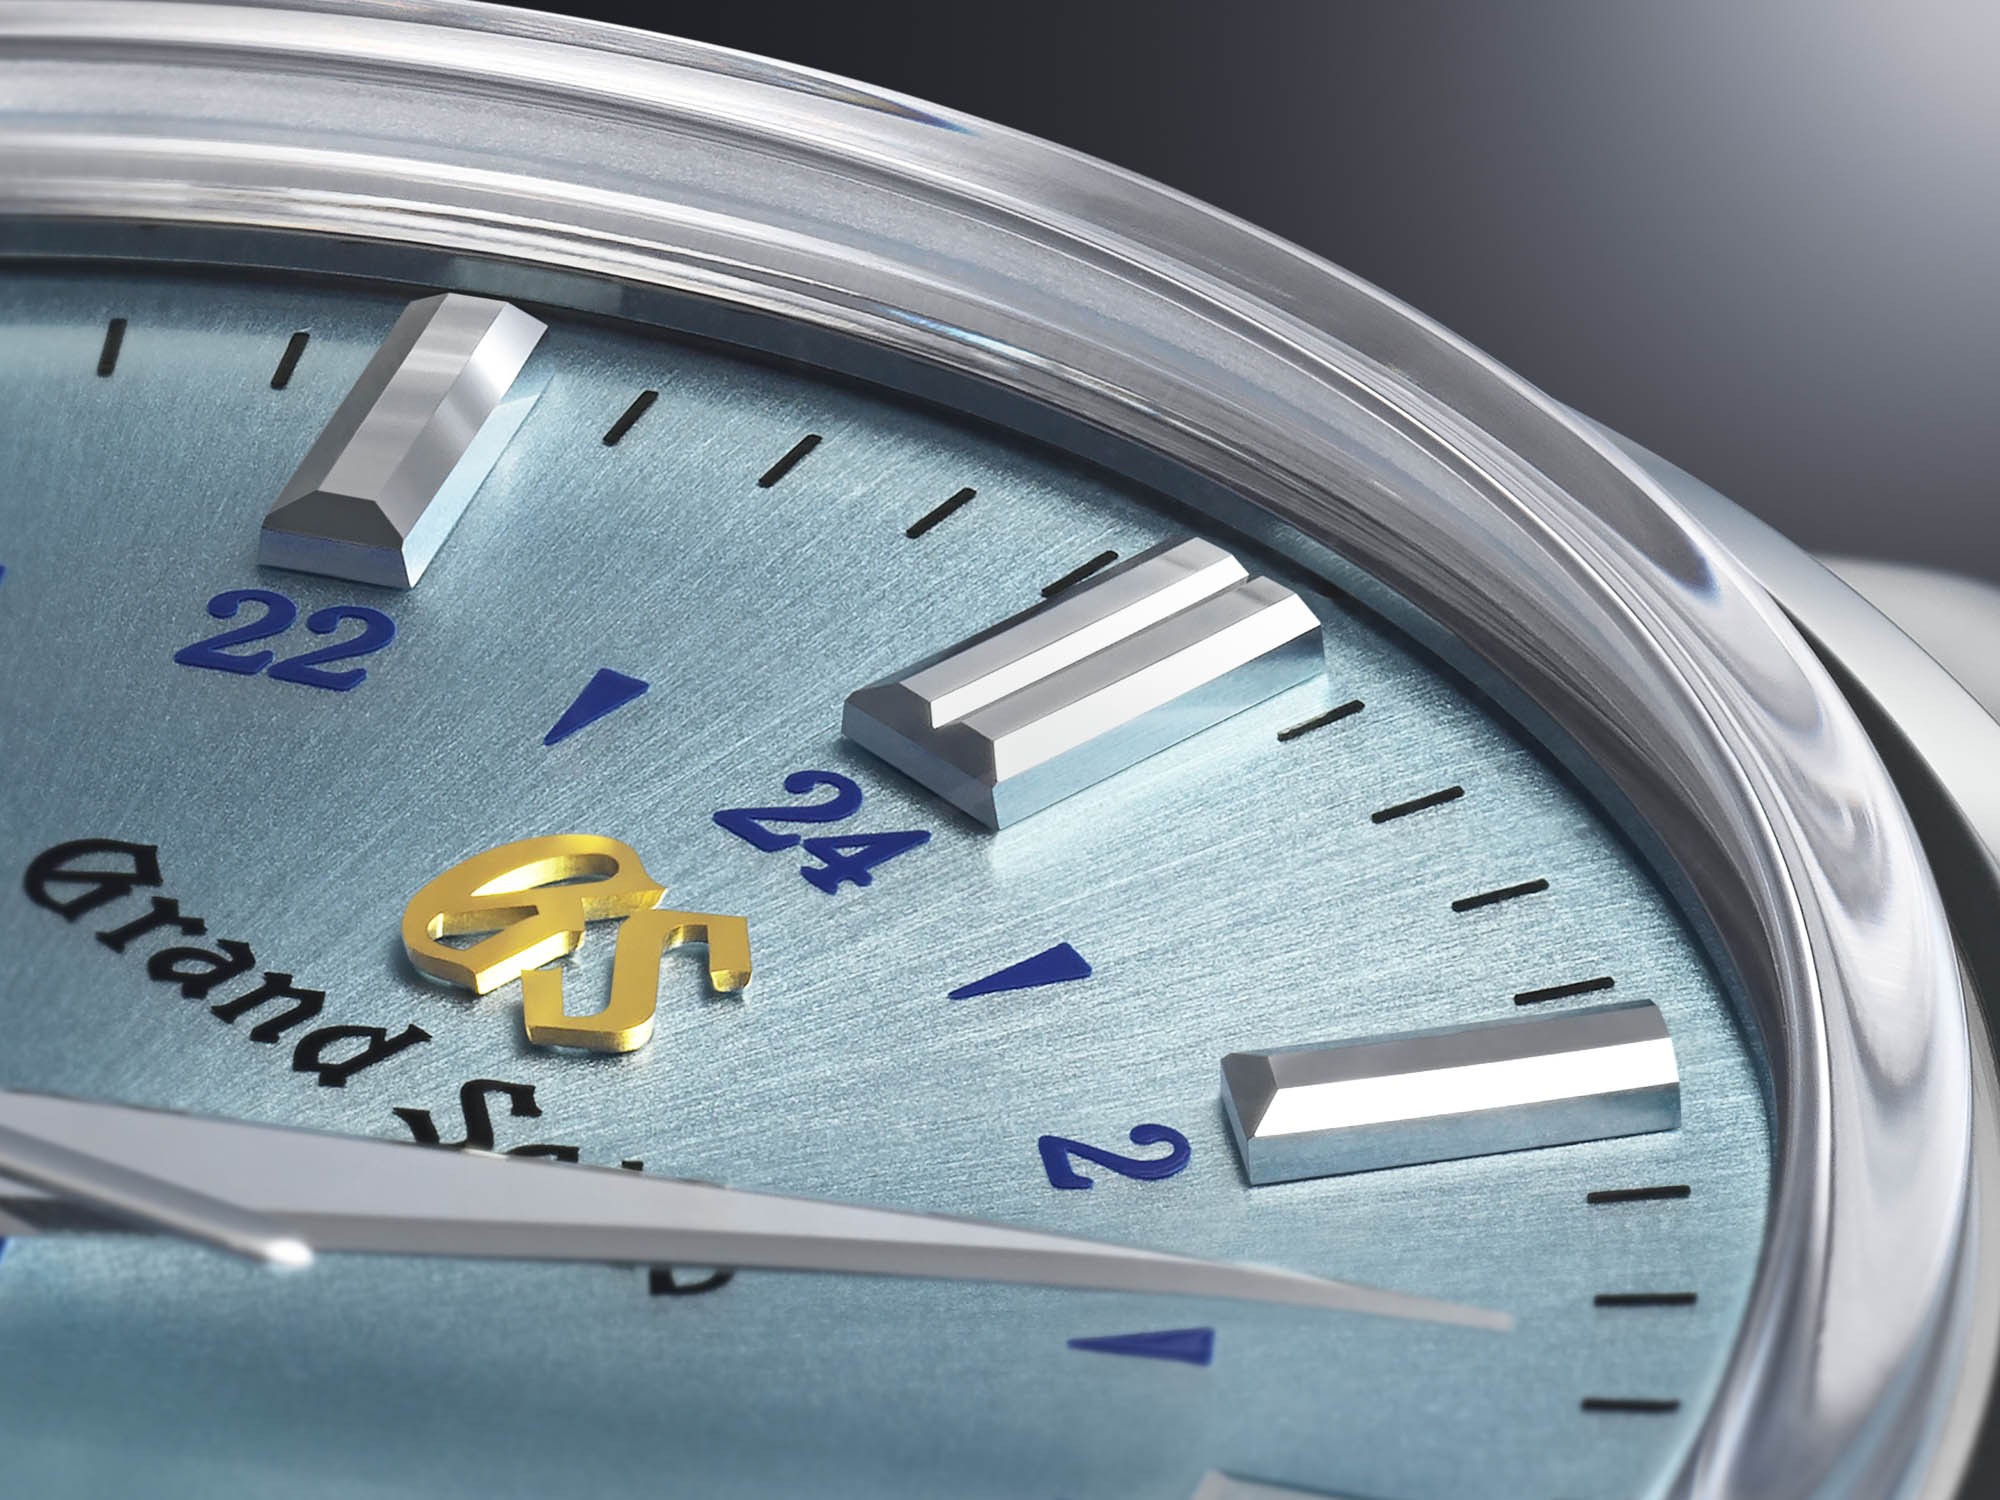 Новый выпуск: Часы Grand Seiko SBGJ275 и SBGM253 Caliber 9S 25th Anniversary Limited-Edition GMT